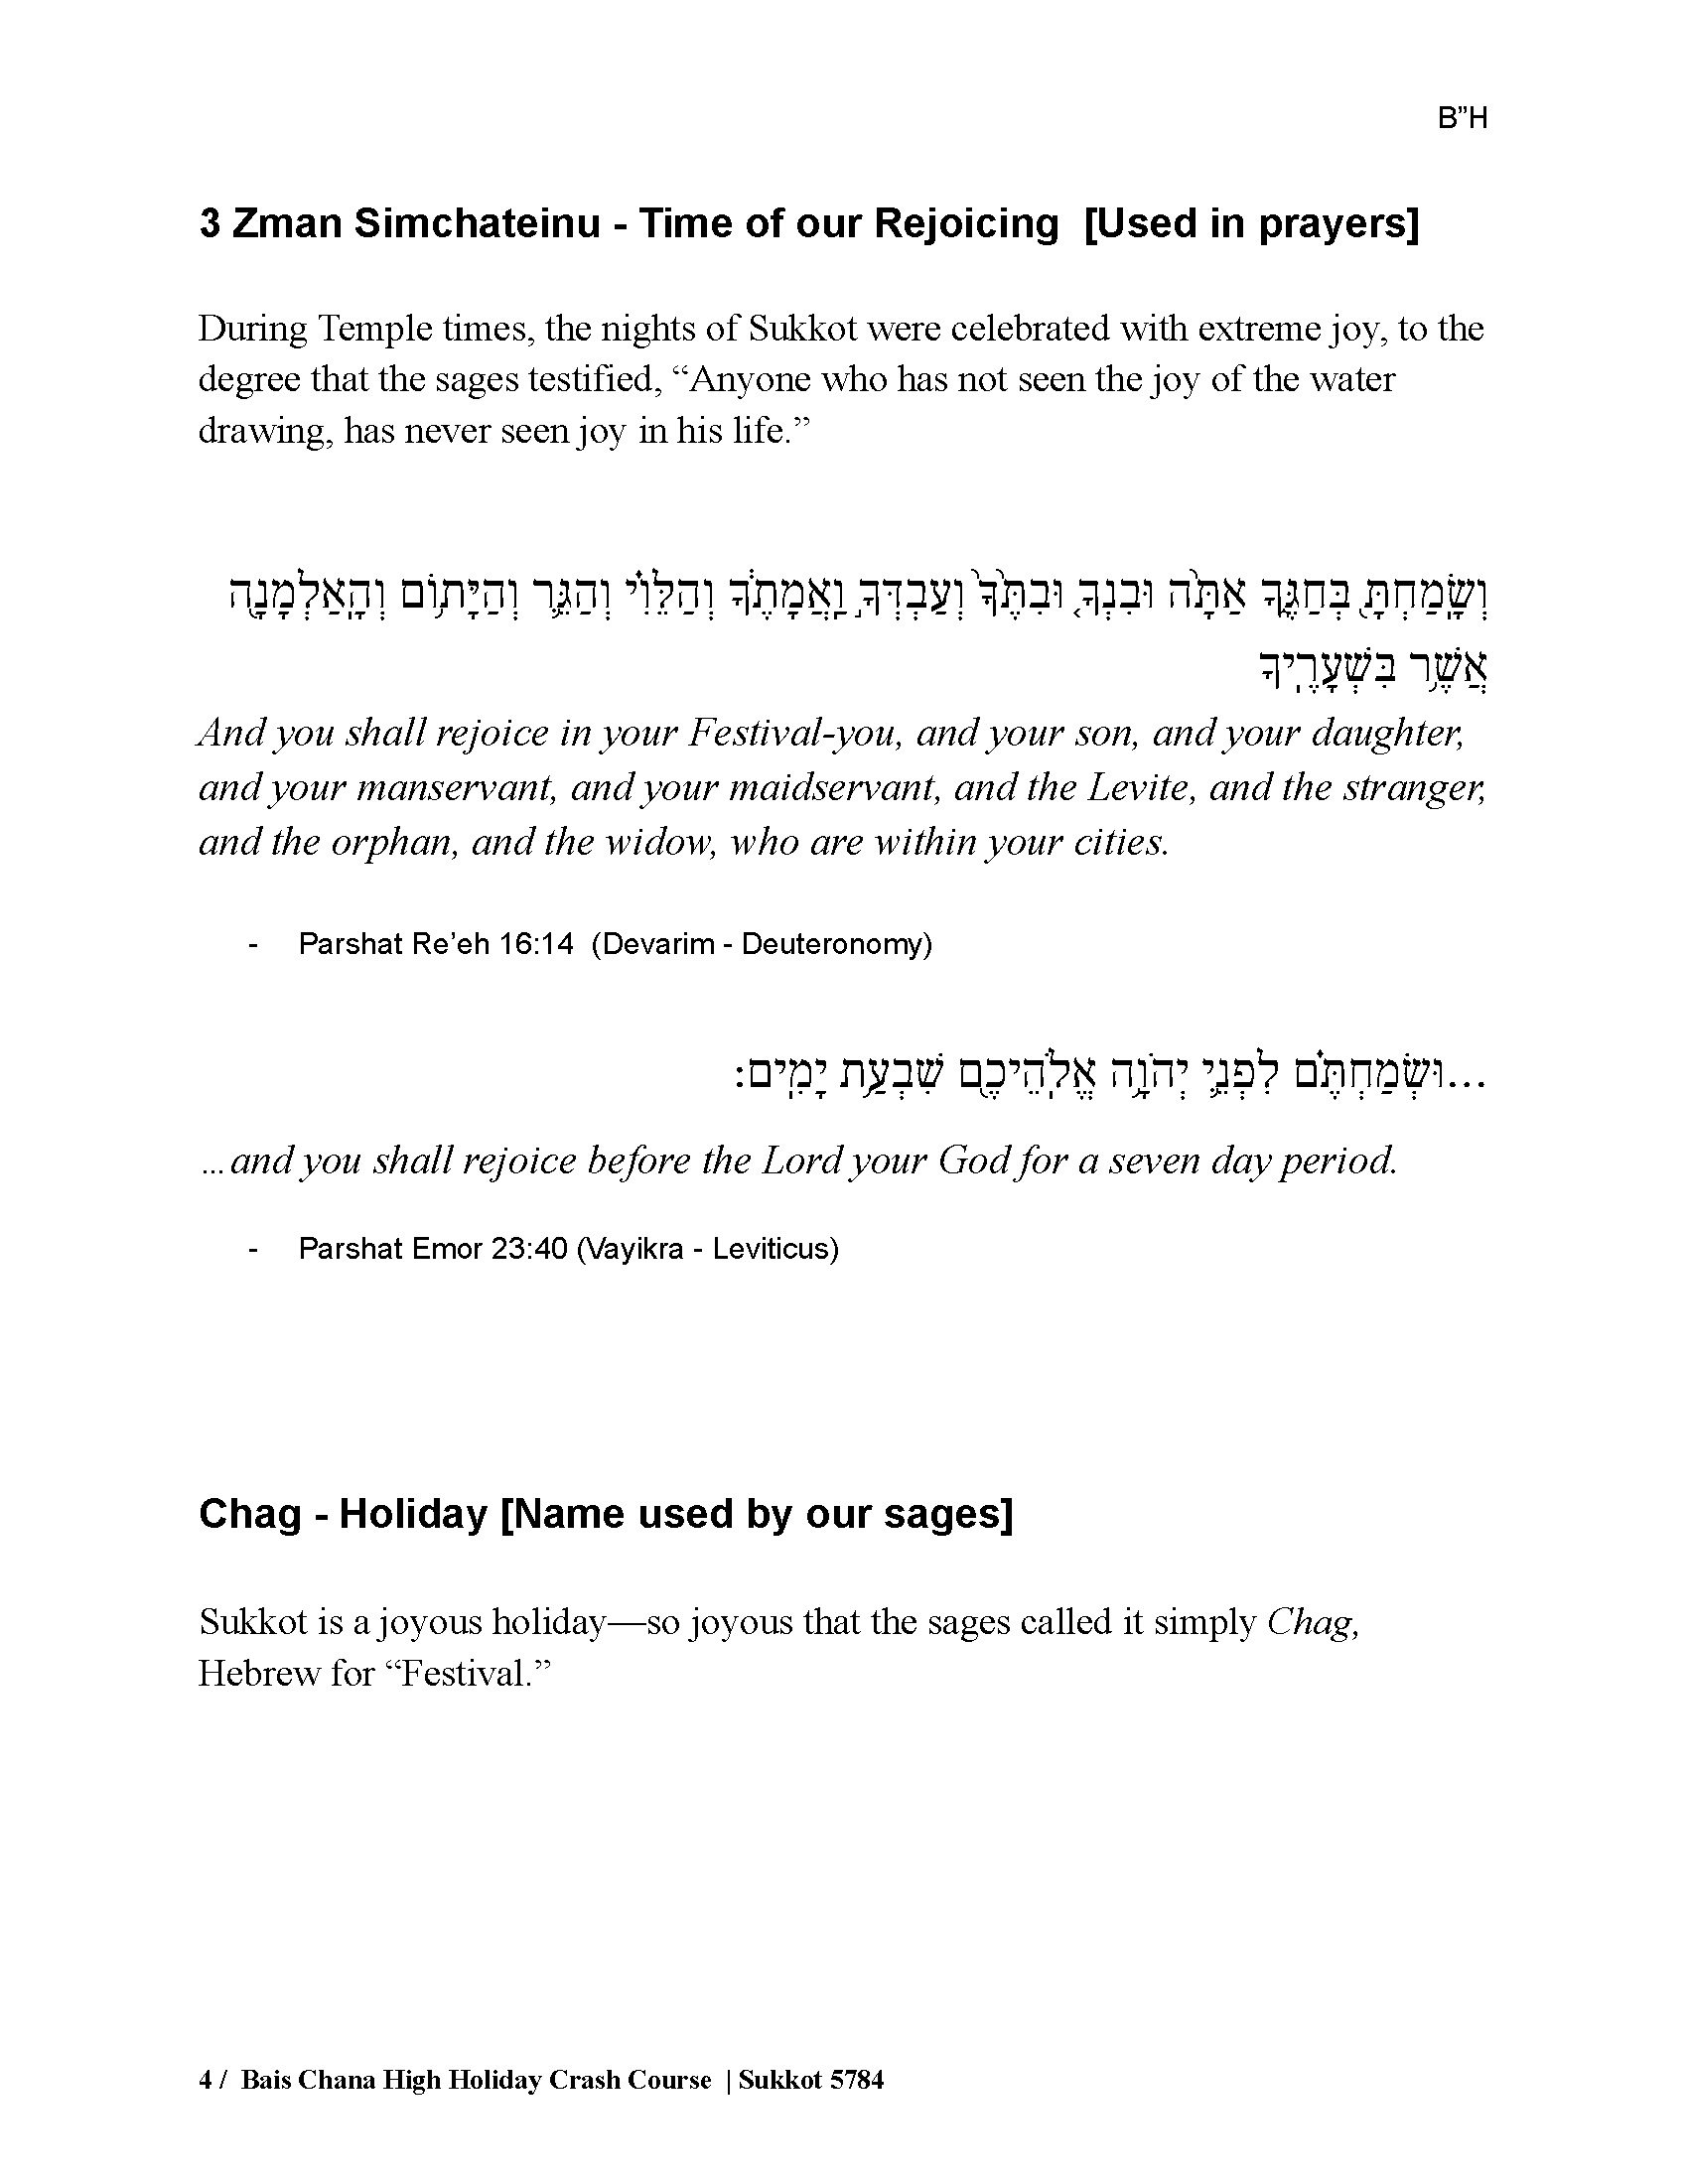 High Holidays 5784 - Sukkot crash course_Page_04